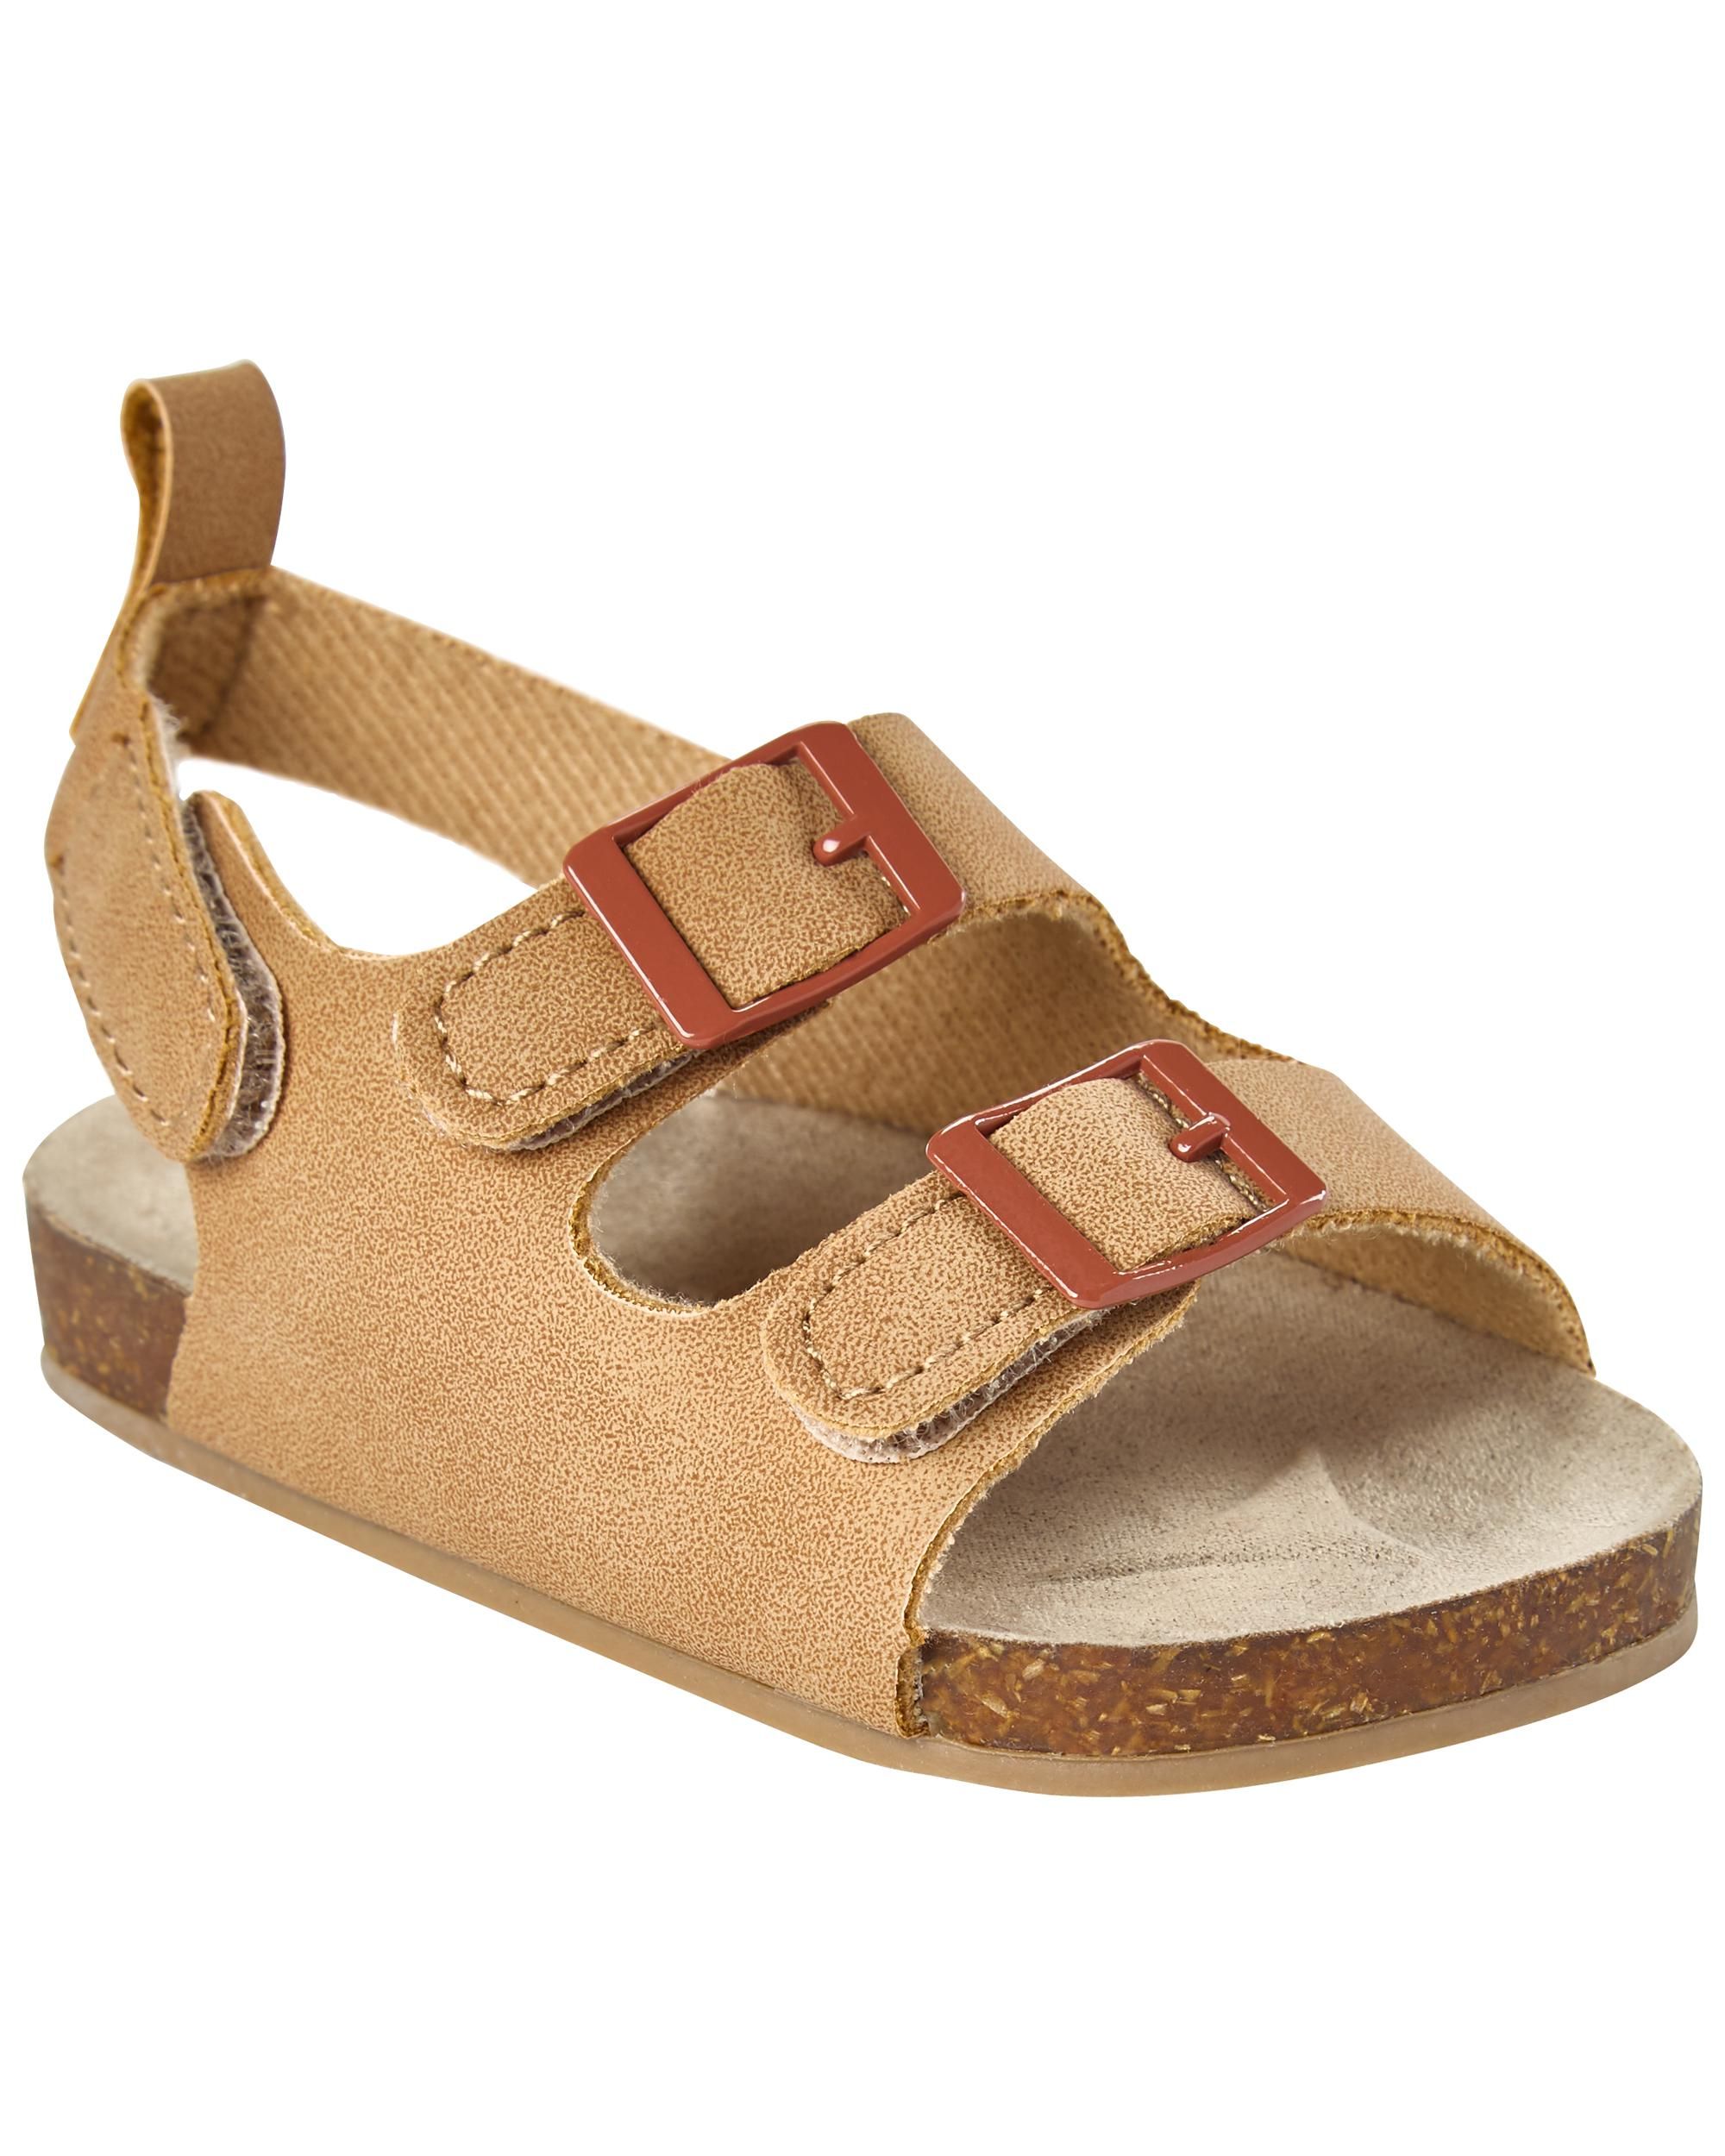 Buckle Footbed Sandals | Carter's